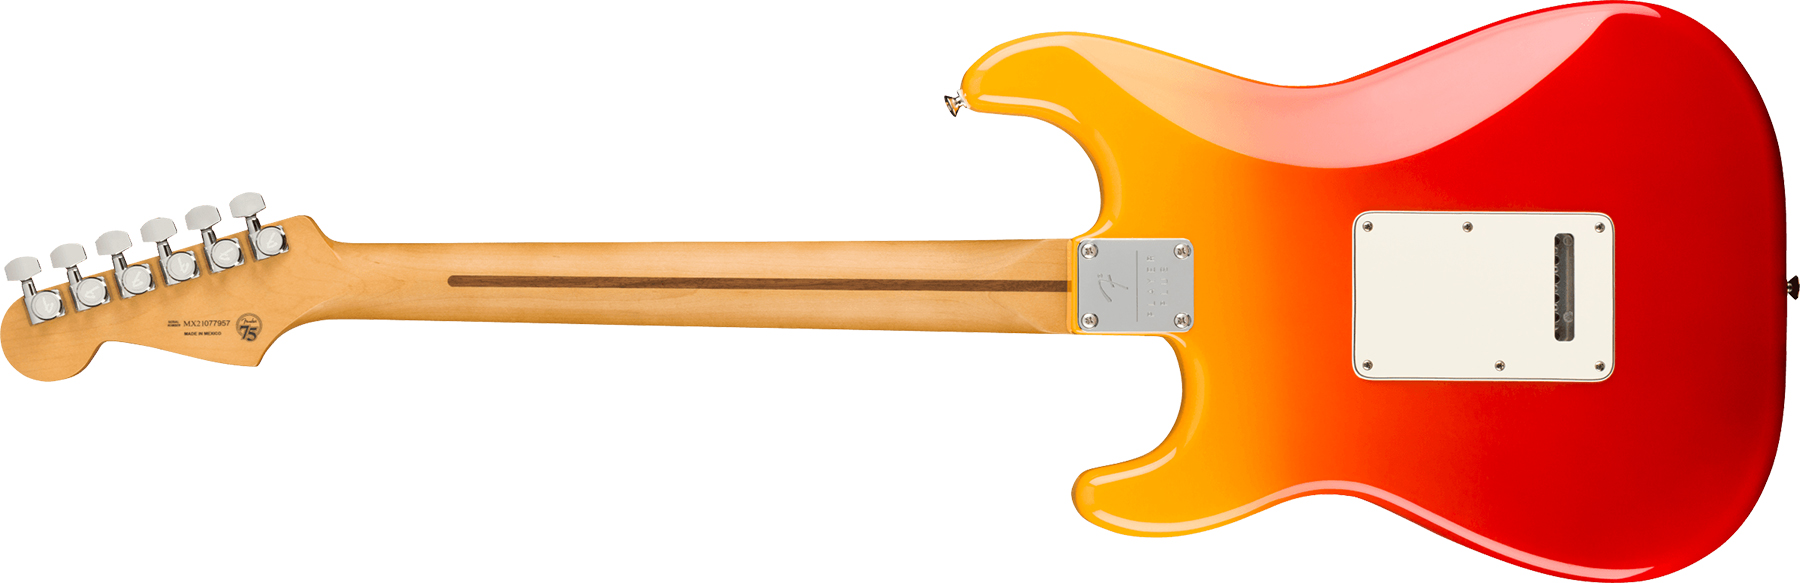 Fender Strat Player Plus Mex 3s Trem Mn - Tequila Sunrise - Guitarra eléctrica con forma de str. - Variation 1